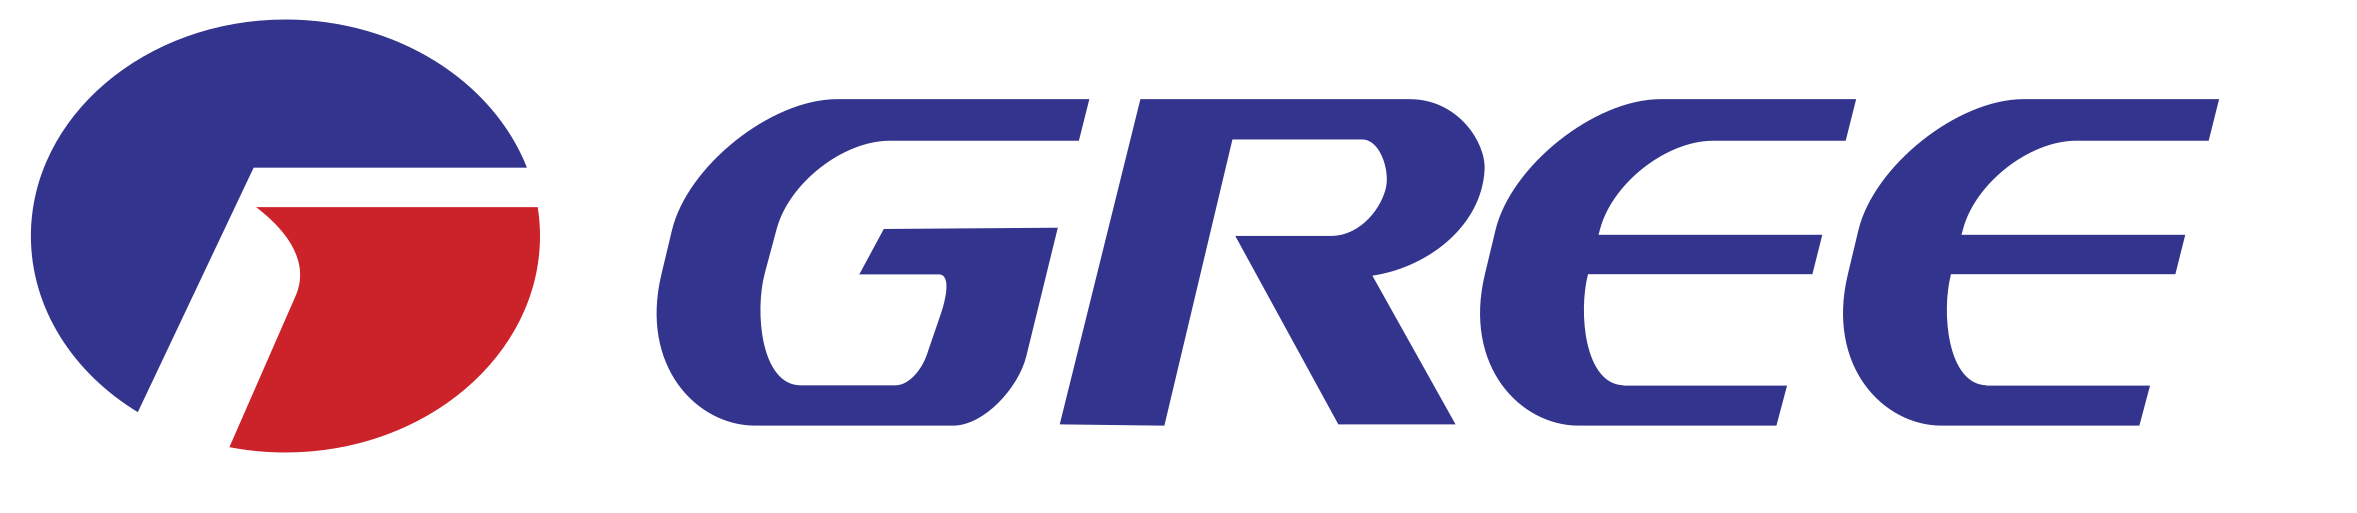 gree-logo-png-transparent